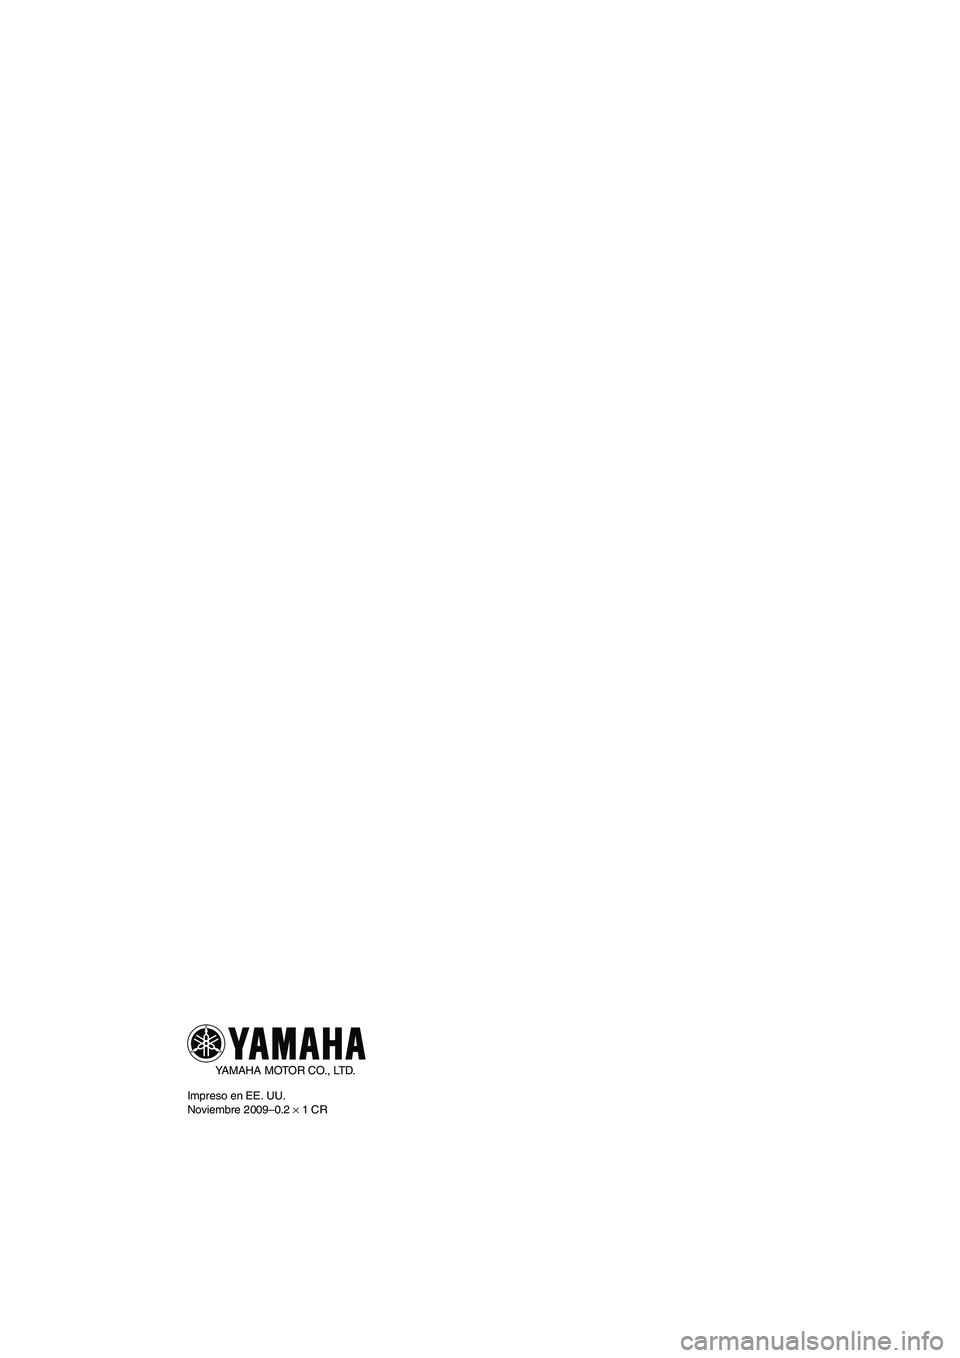 YAMAHA VX SPORT 2010  Manuale de Empleo (in Spanish) YAMAHA MOTOR CO., LTD.
Impreso en EE. UU.
Noviembre 2009–0.2 × 1 CR
UF2N70S0.book  Page 1  Thursday, October 8, 2009  1:00 PM 